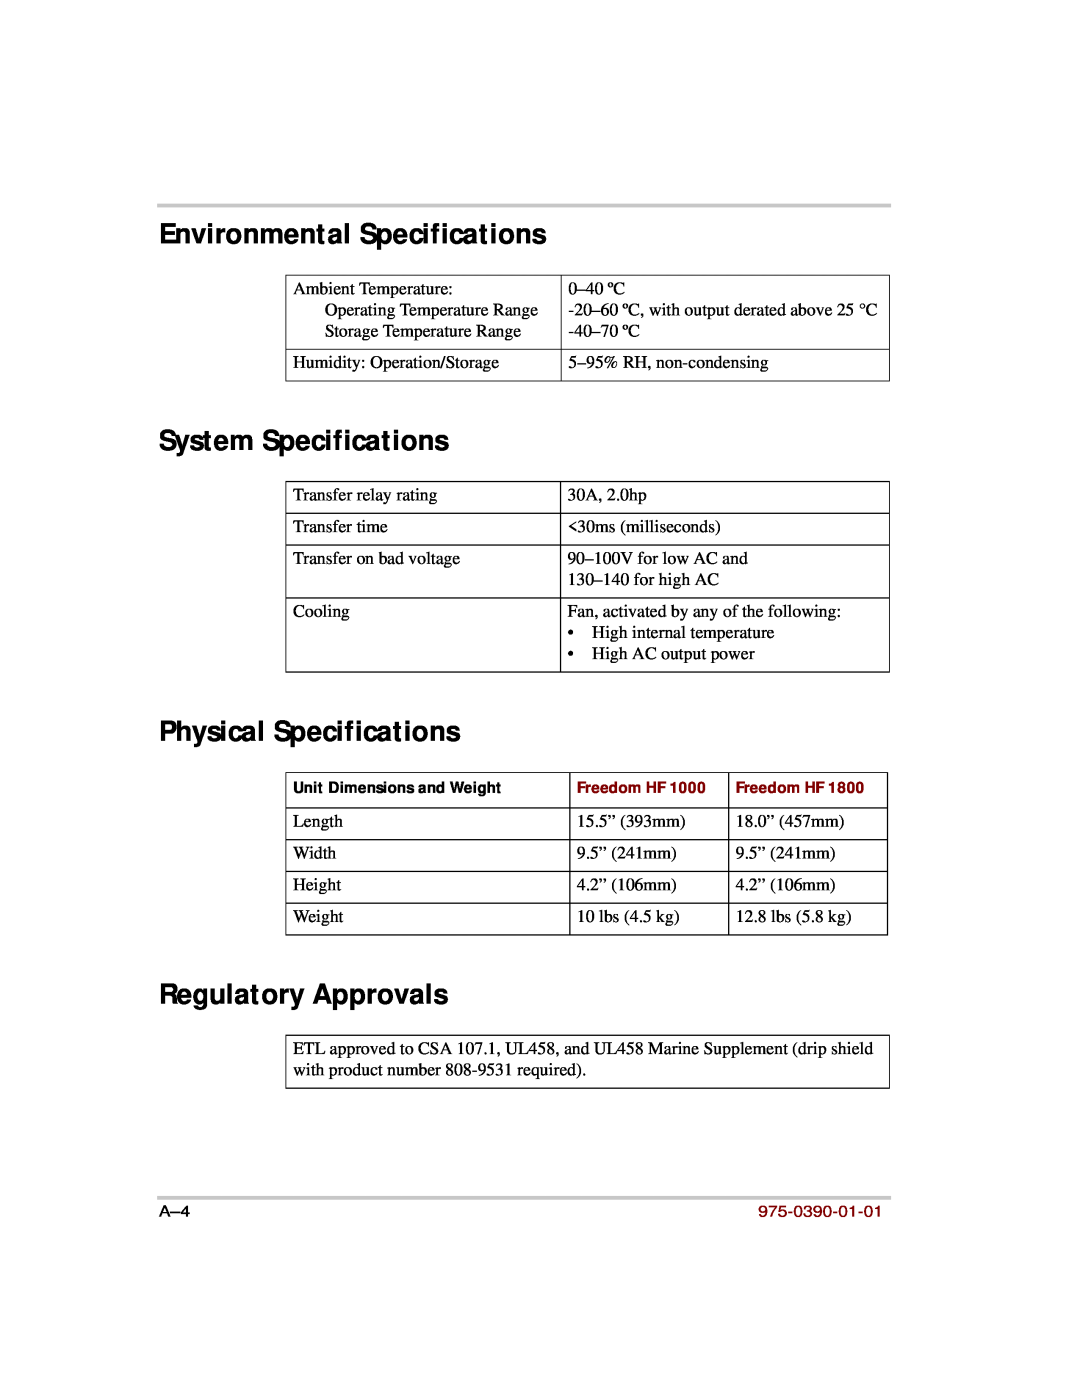 Xantrex Technology HF 1000 manual Environmental Specifications, System Specifications, Physical Specifications, Freedom HF 